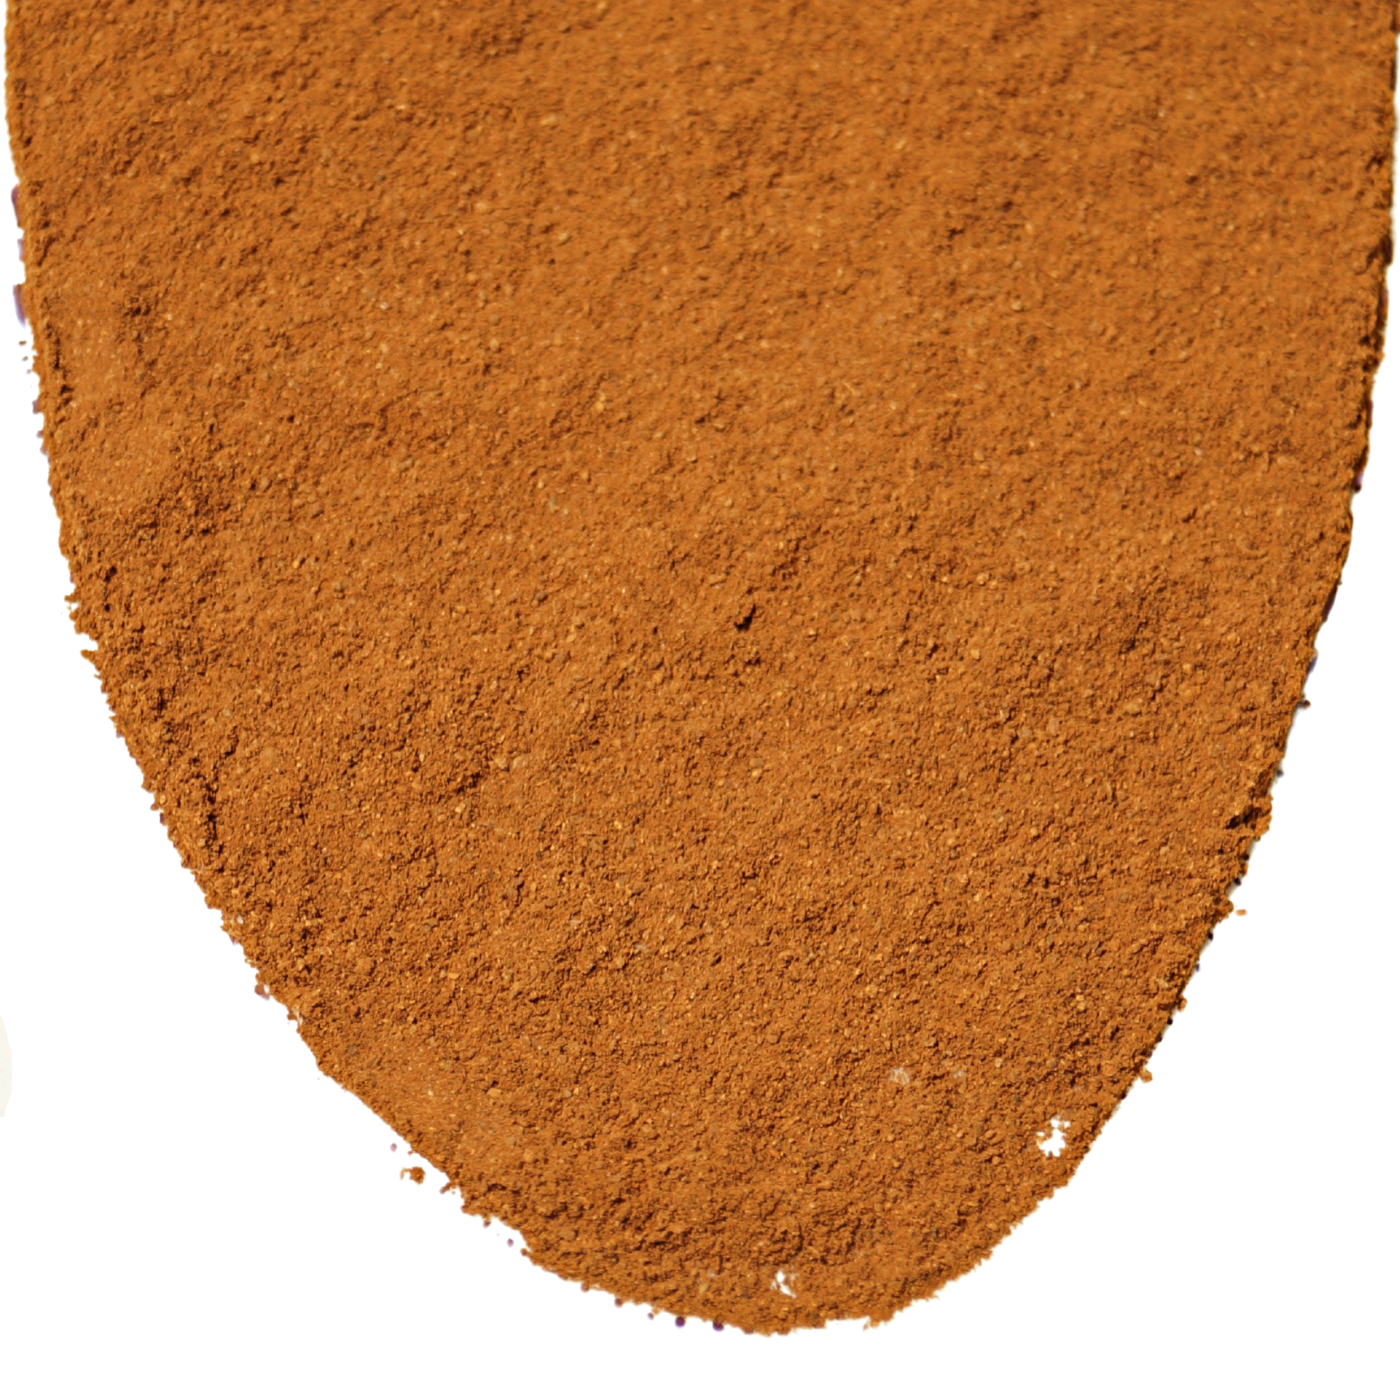 Cinnamon Cassia (Ground)